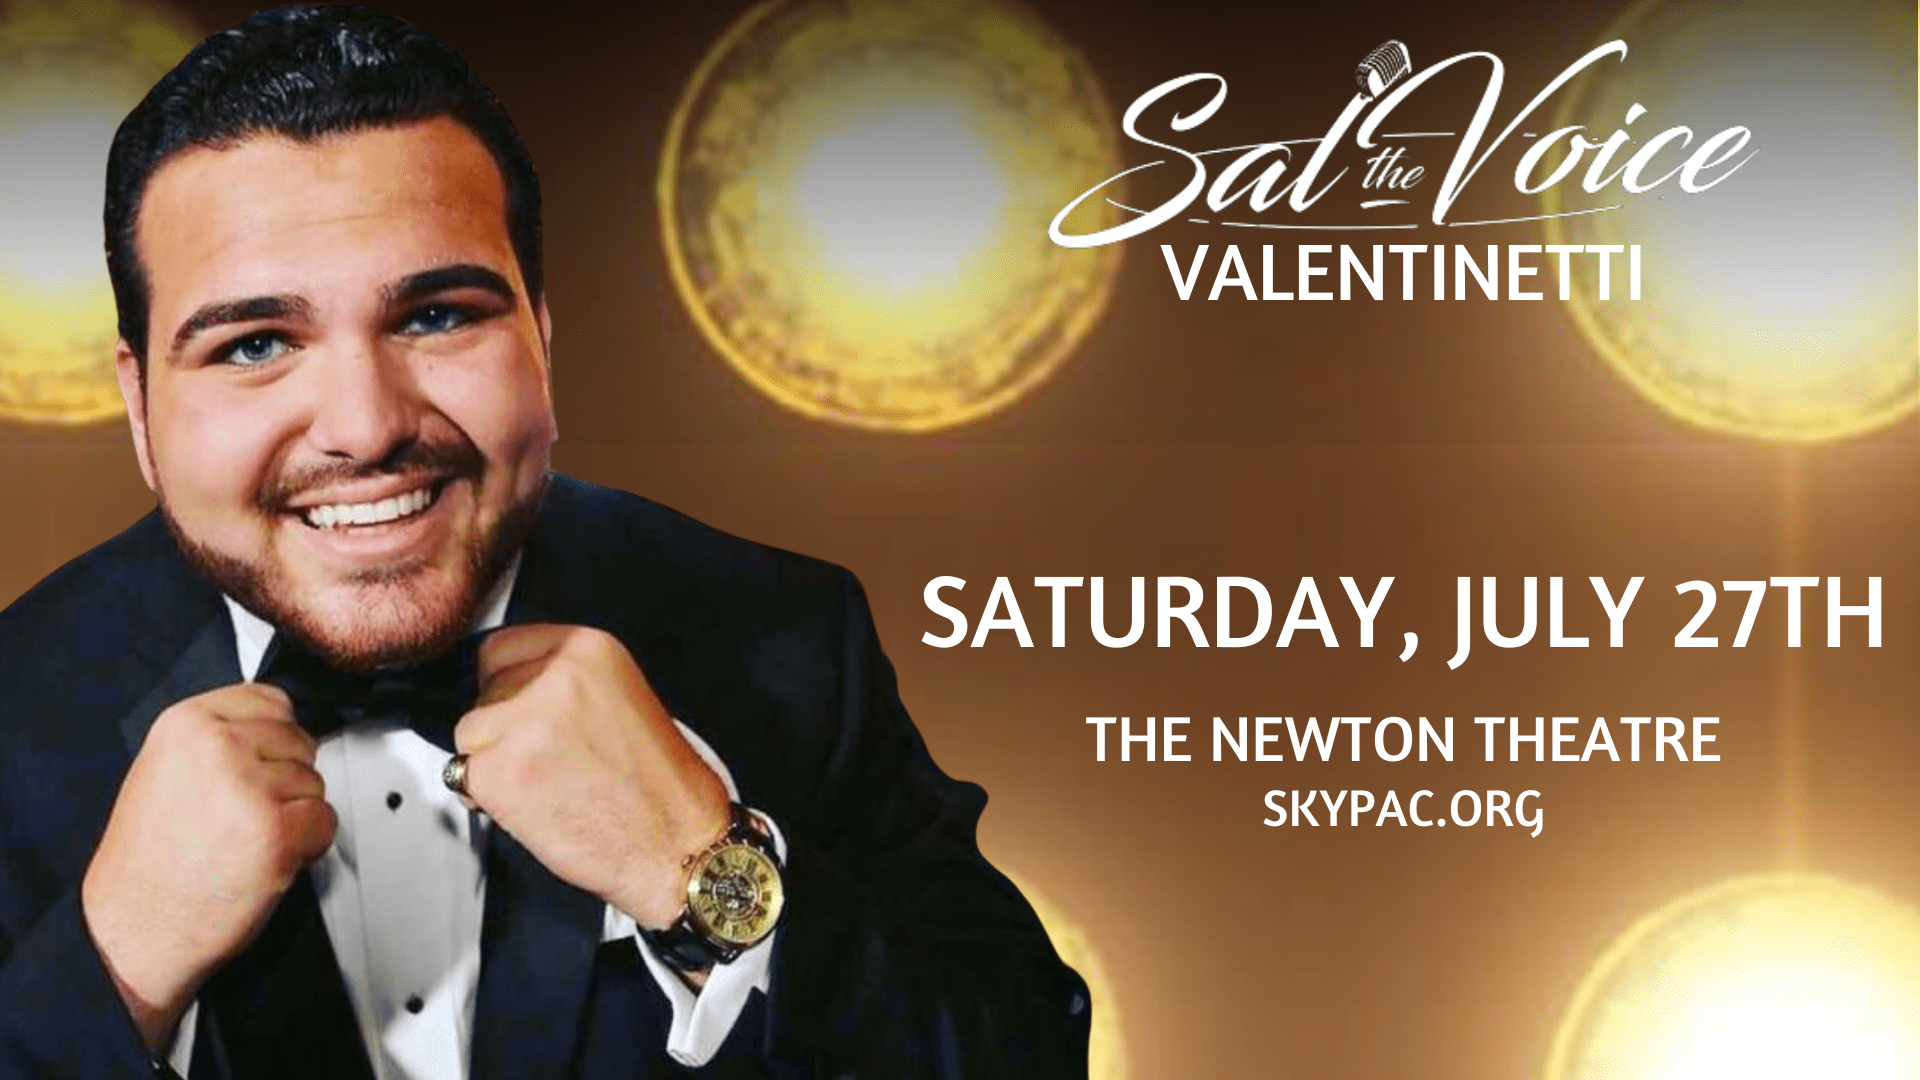 Sal Valentinetti comes to The Newton Theatre on Saturday, July 27th.